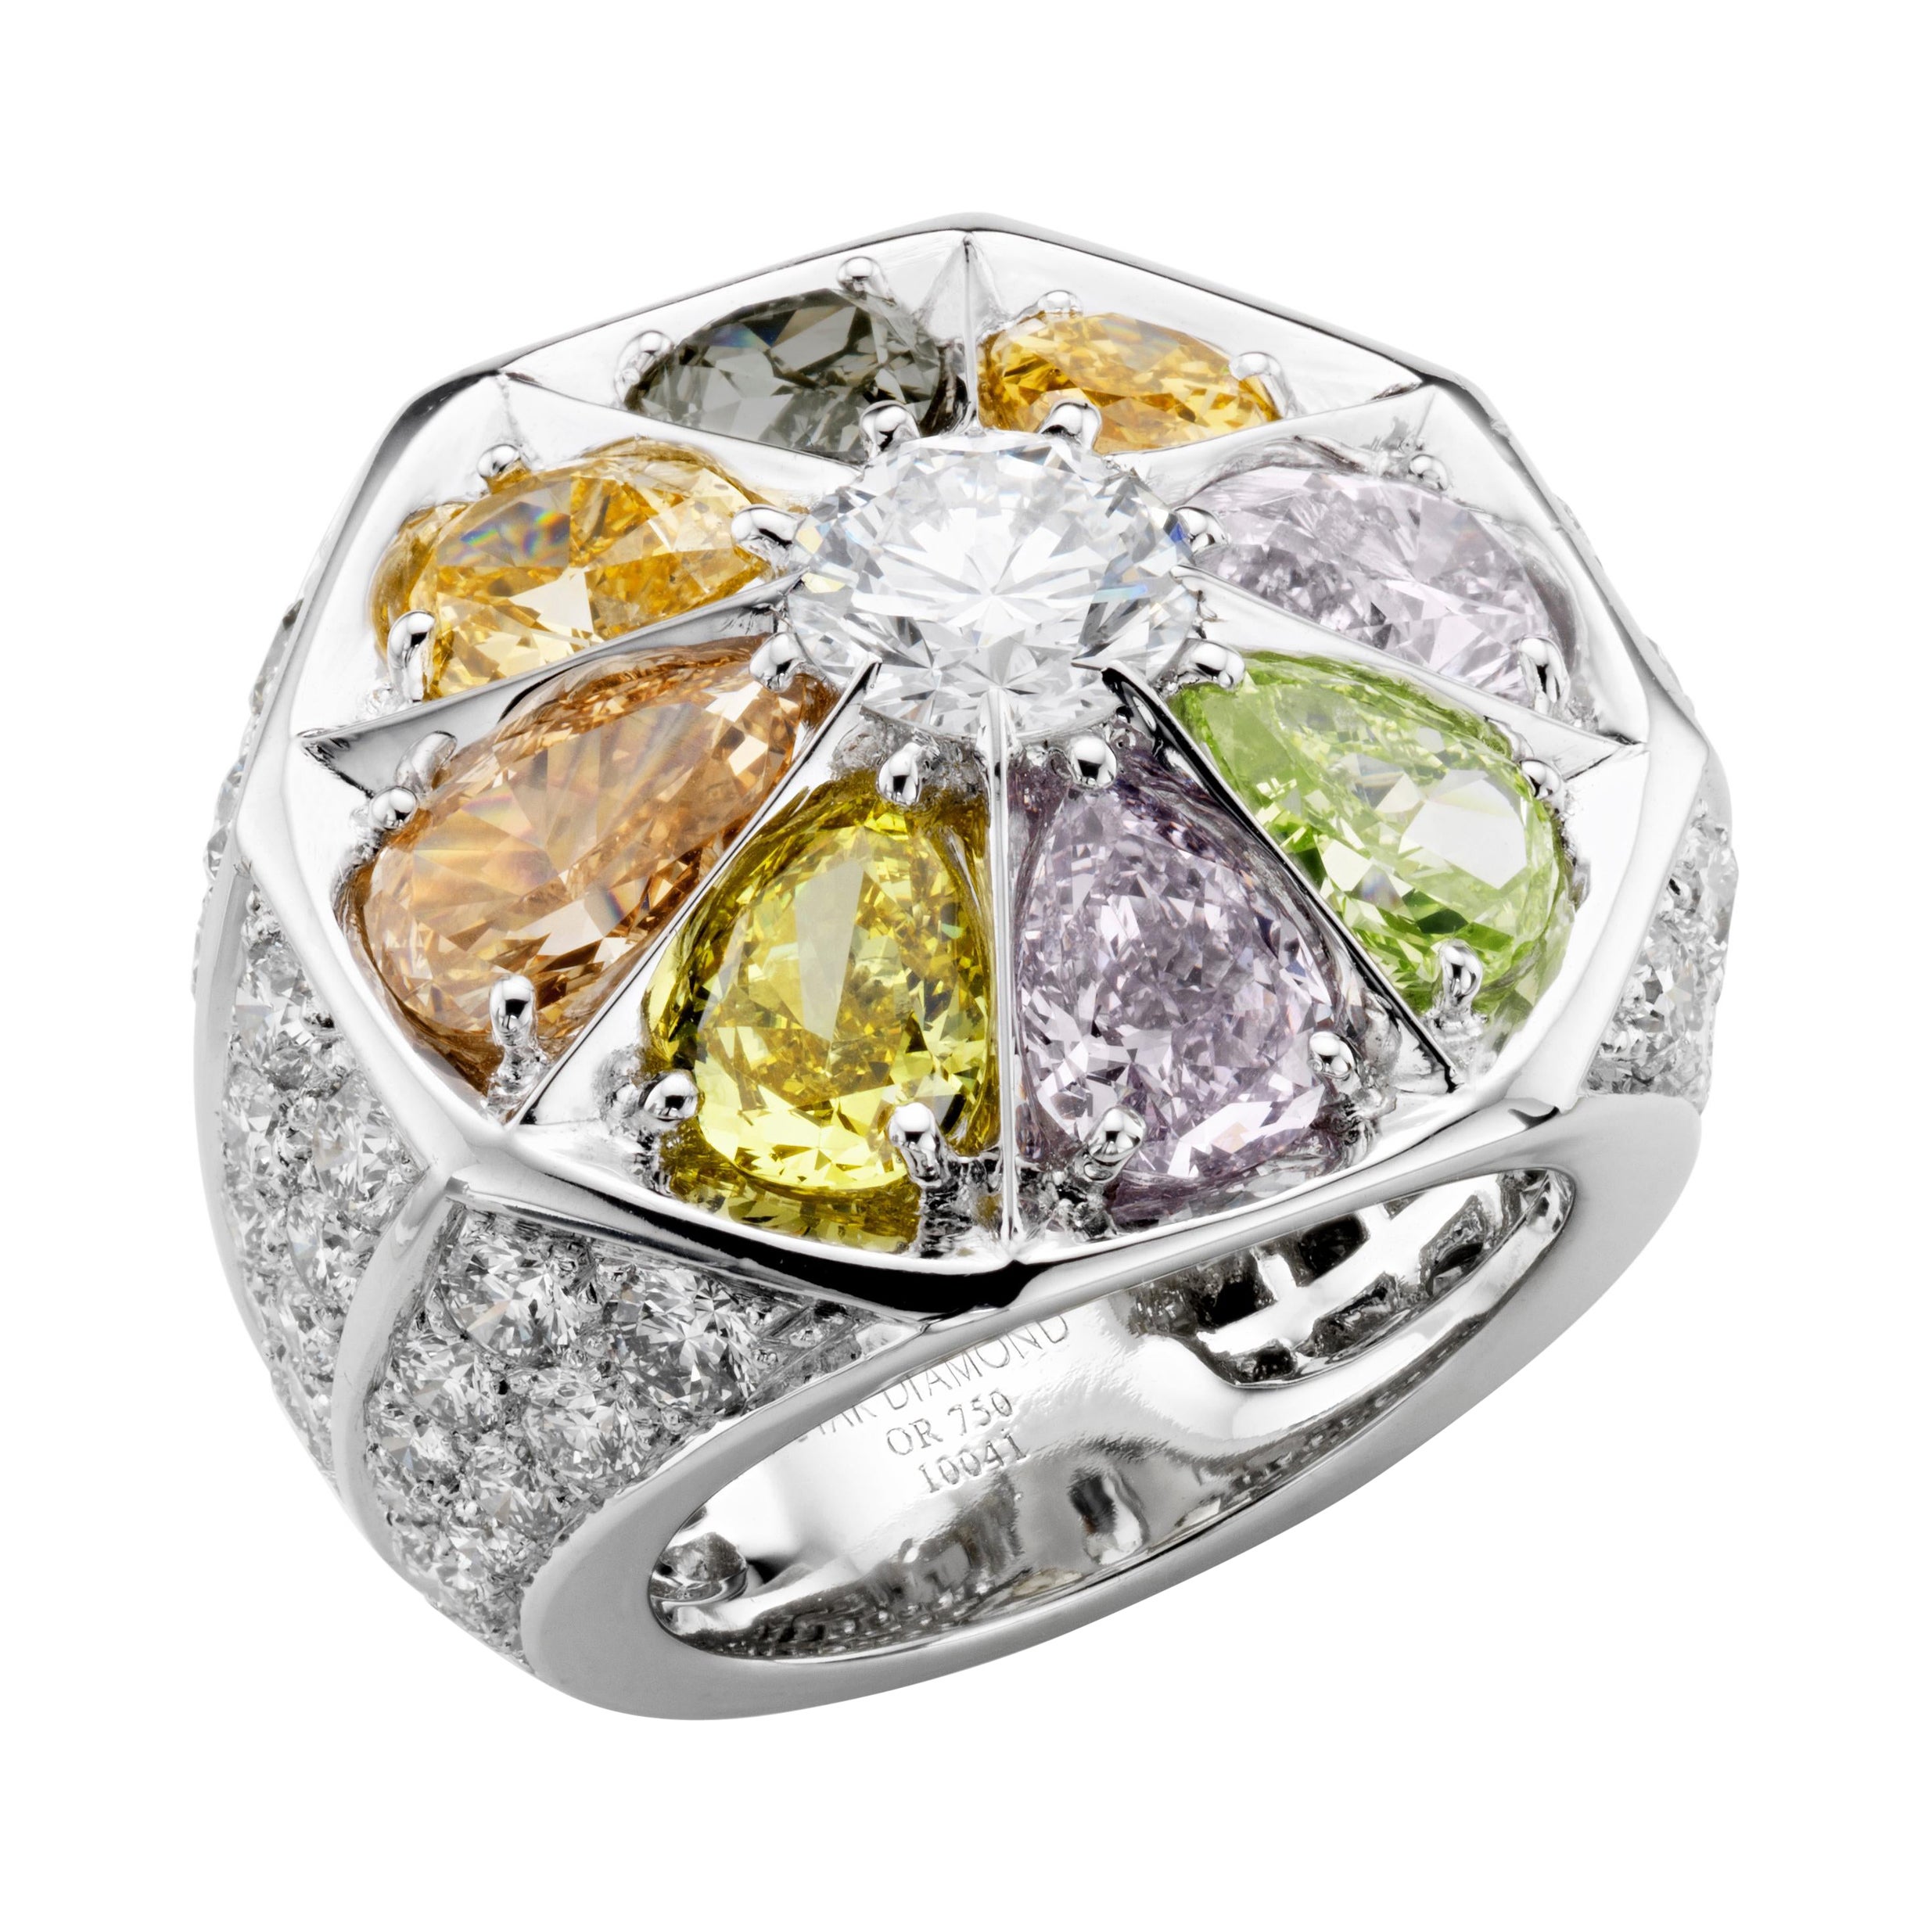 Fancy Coloured & White Diamond Ring Set in 18K White Gold For Sale